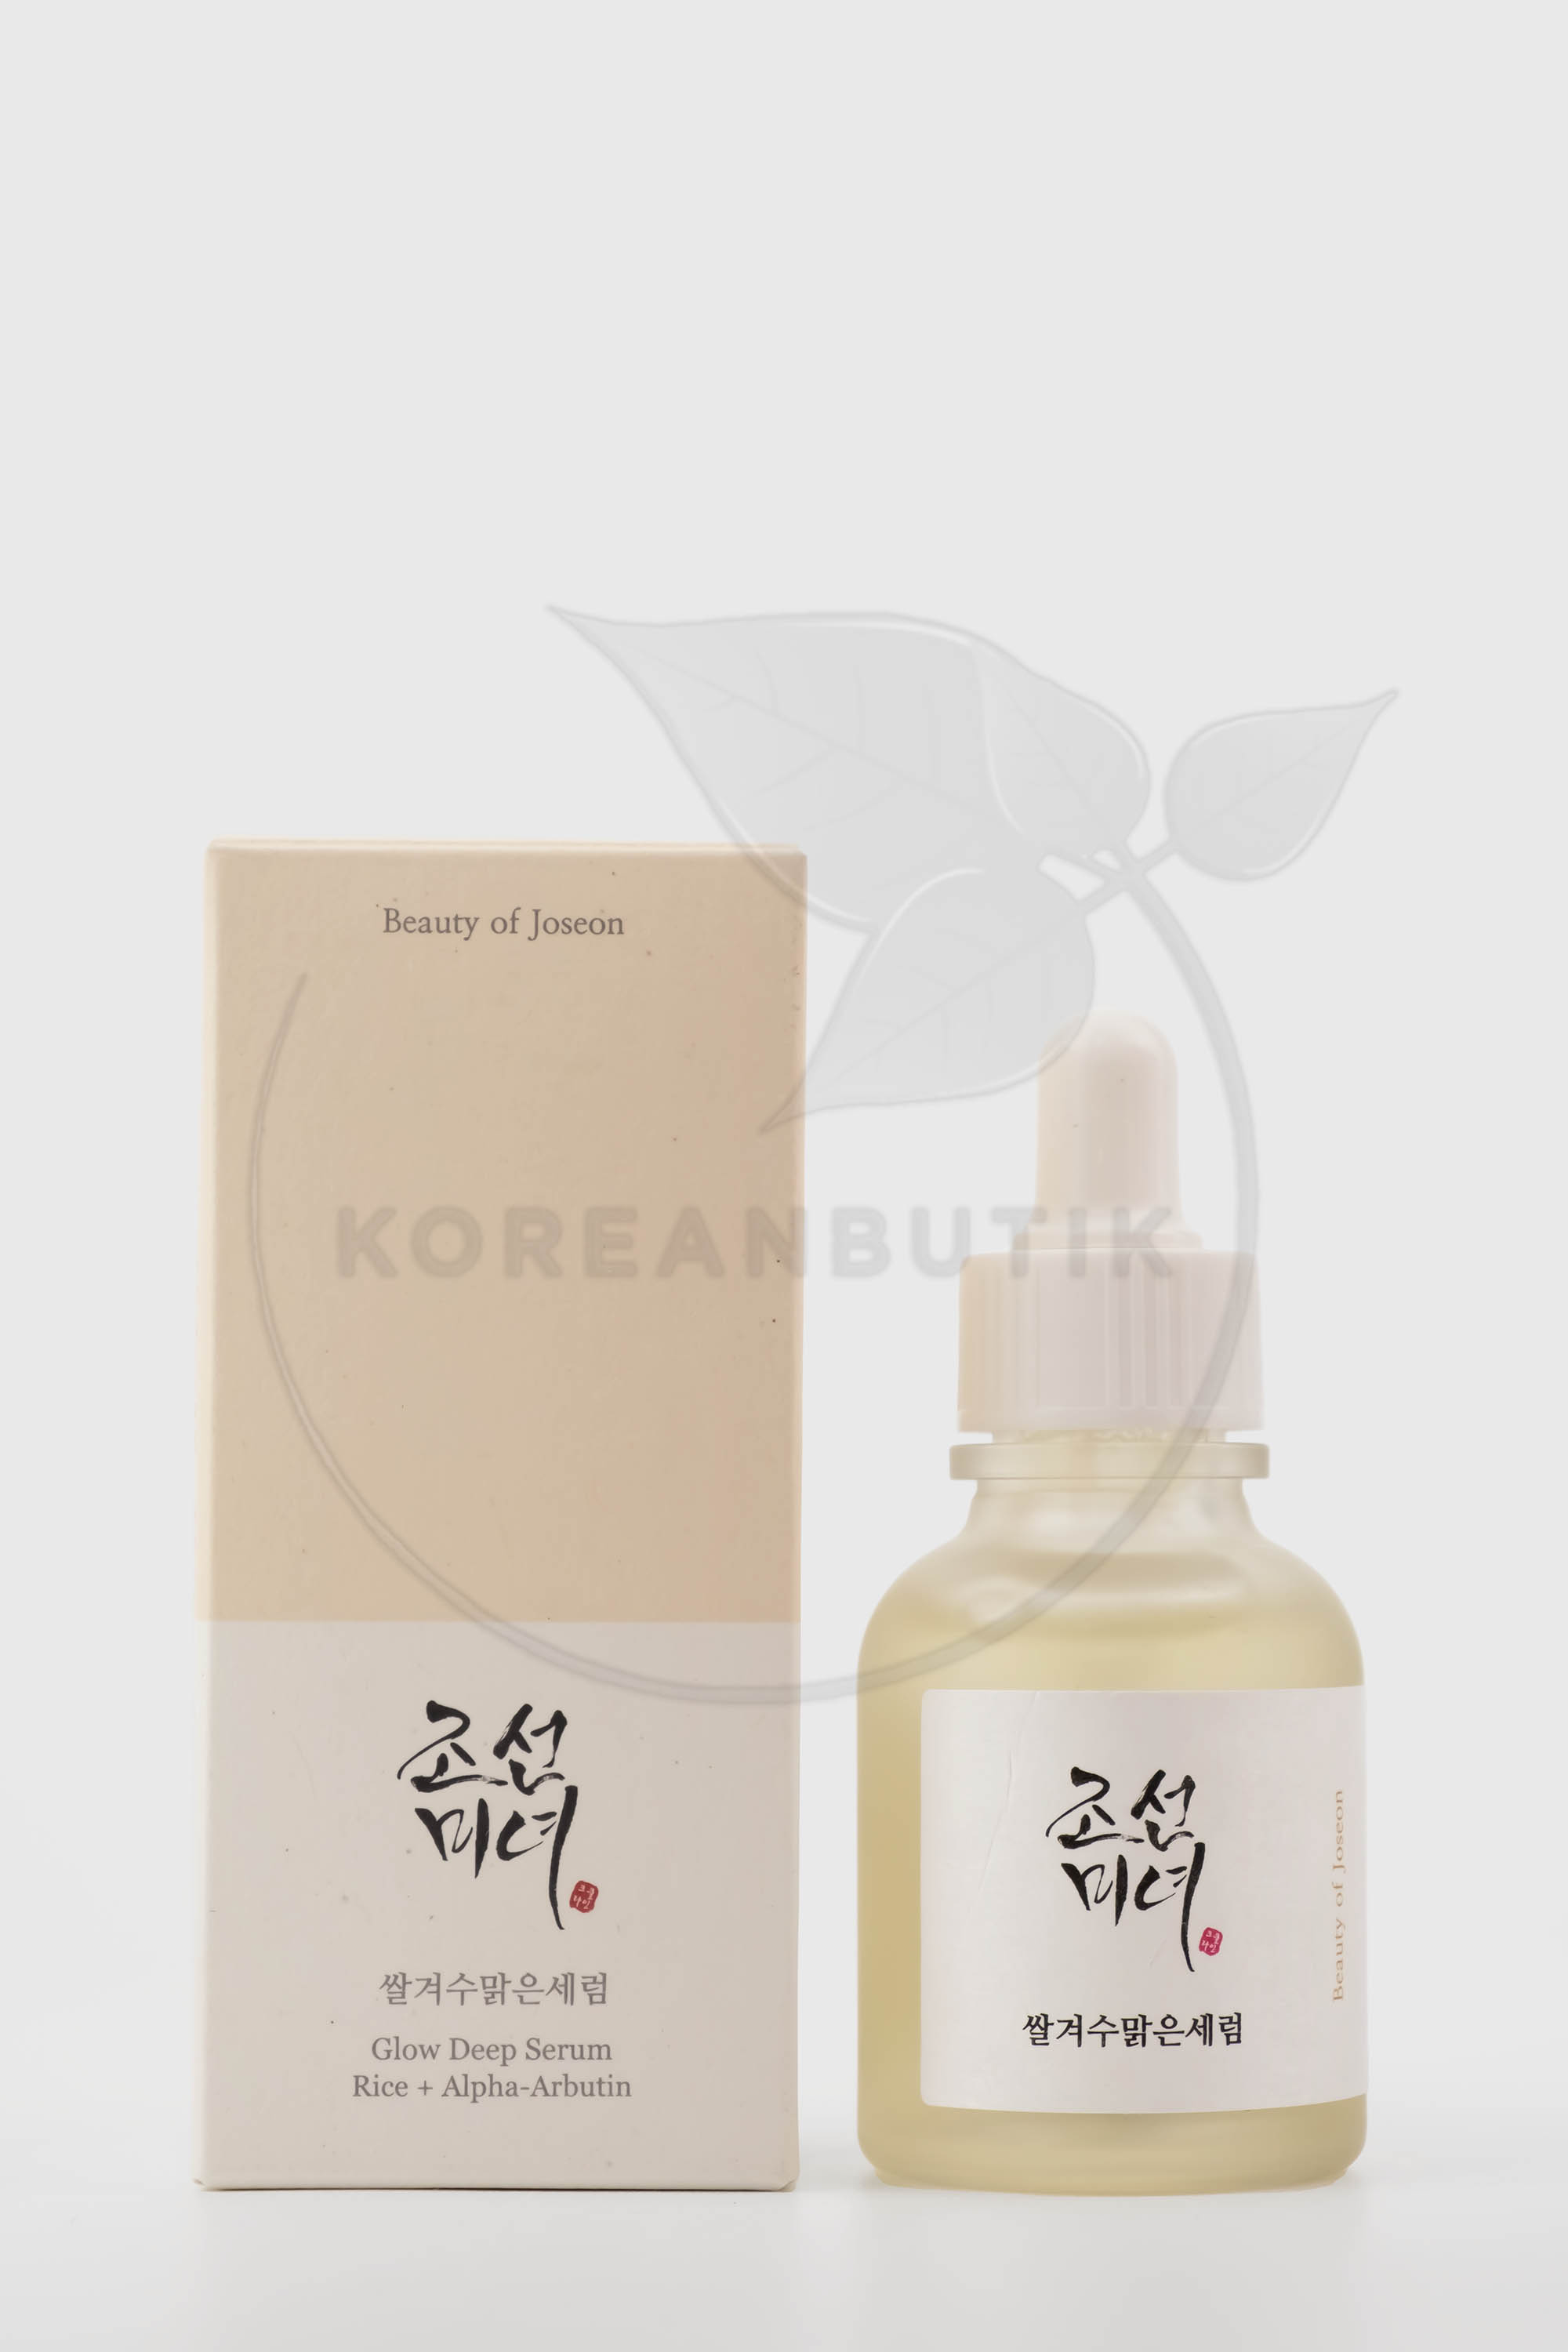  Beauty of Joseon Glow Deep Serum: ..